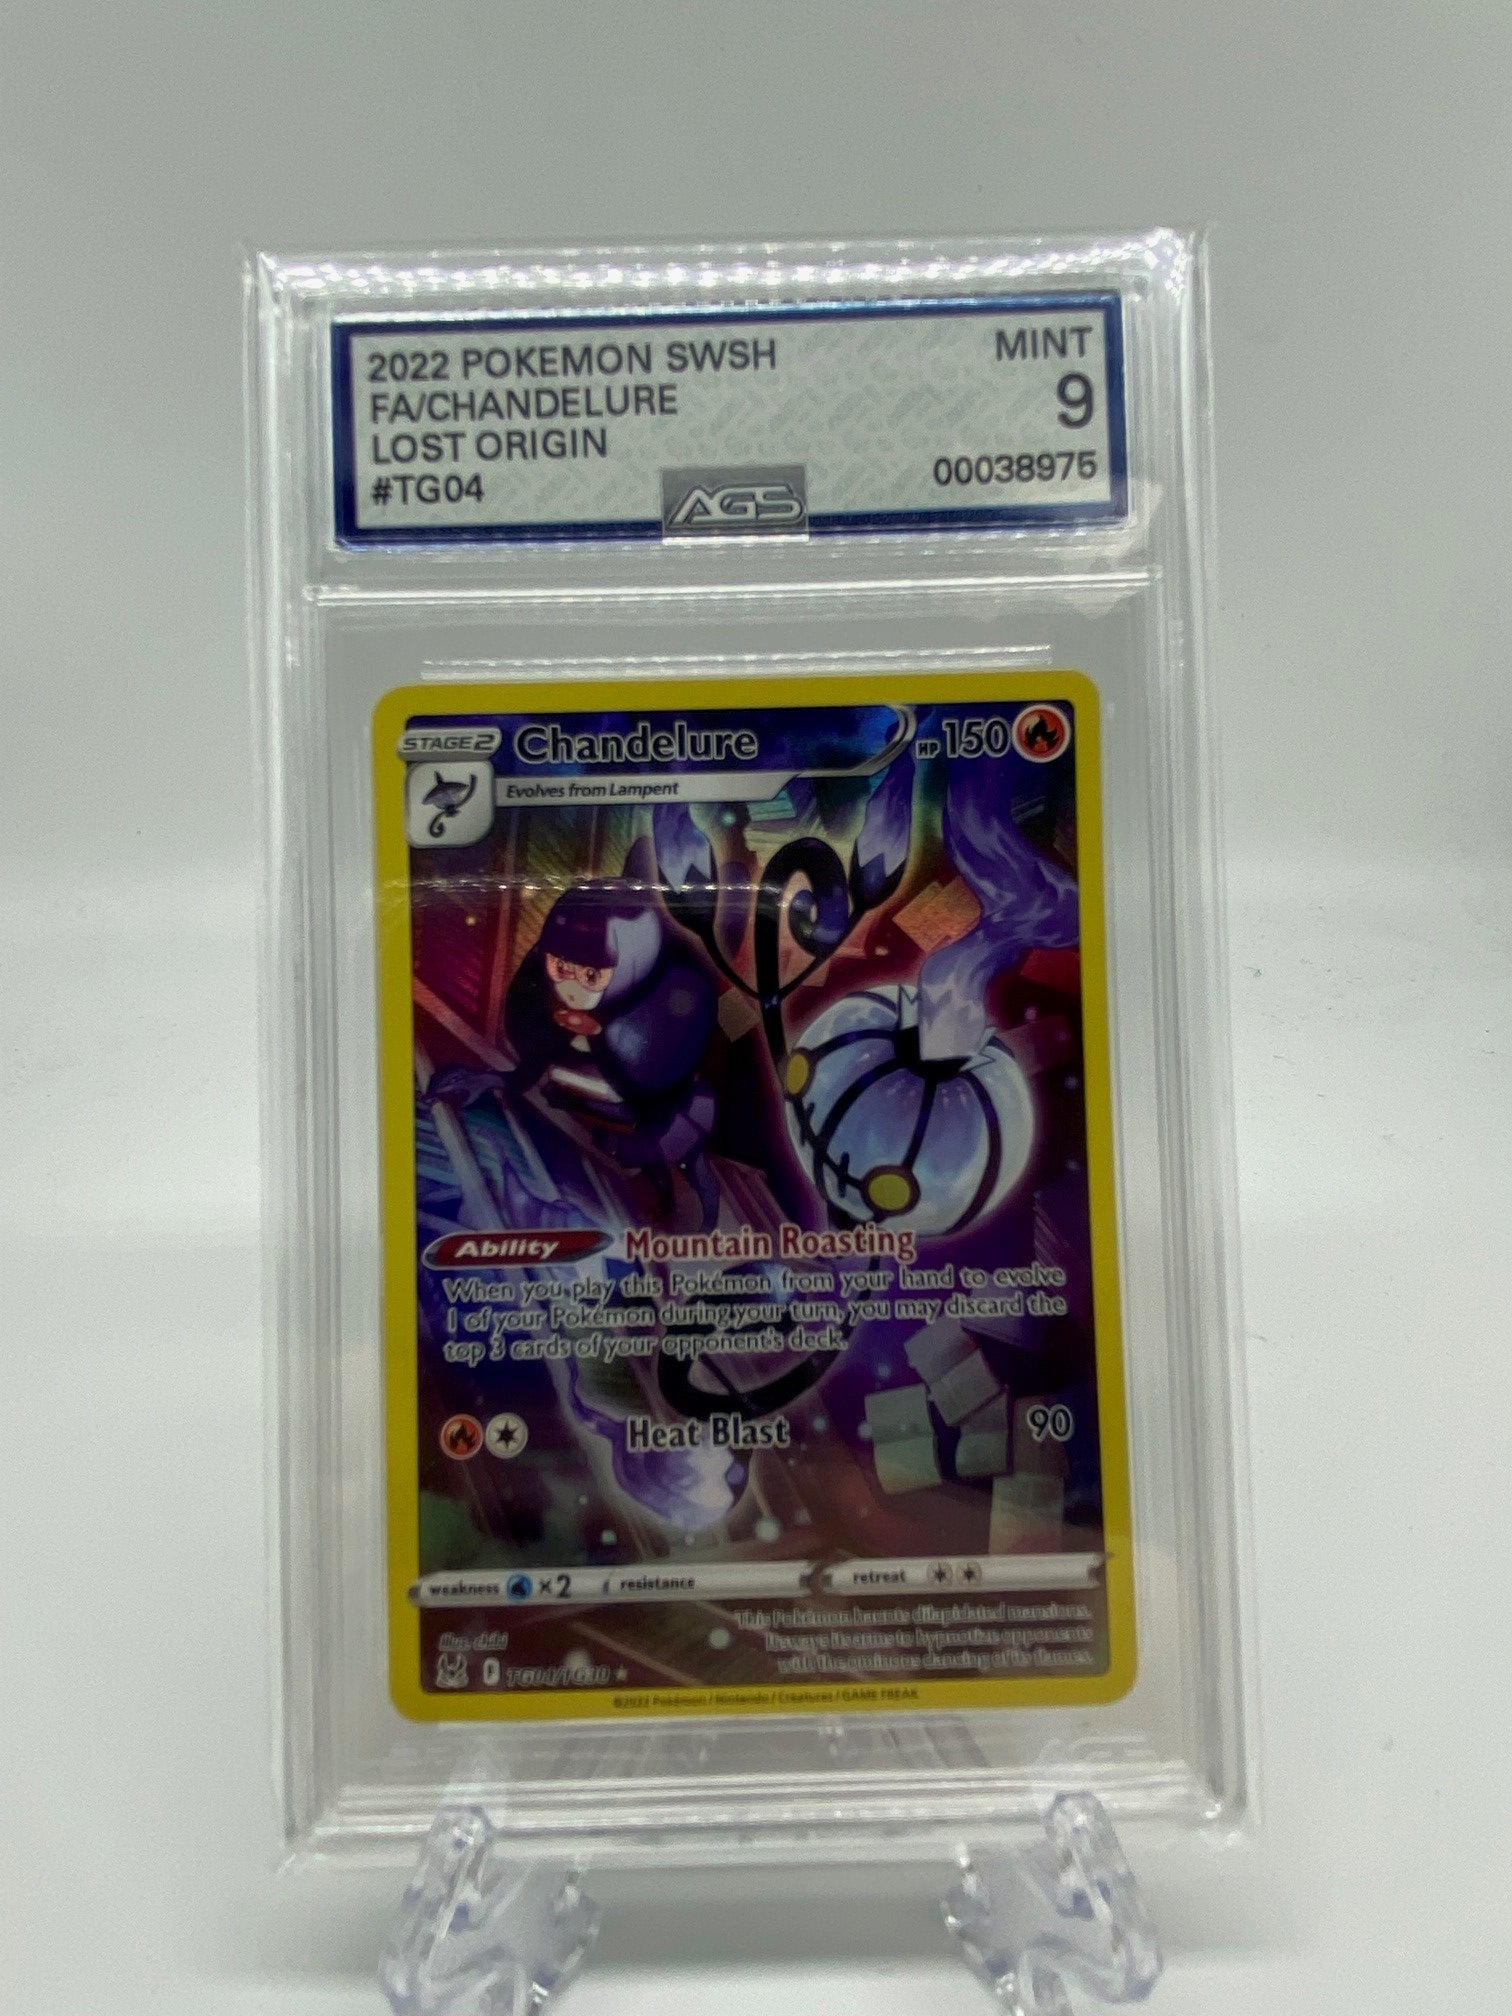 Lunala GX - PSA Graded Pokemon Cards - Pokemon